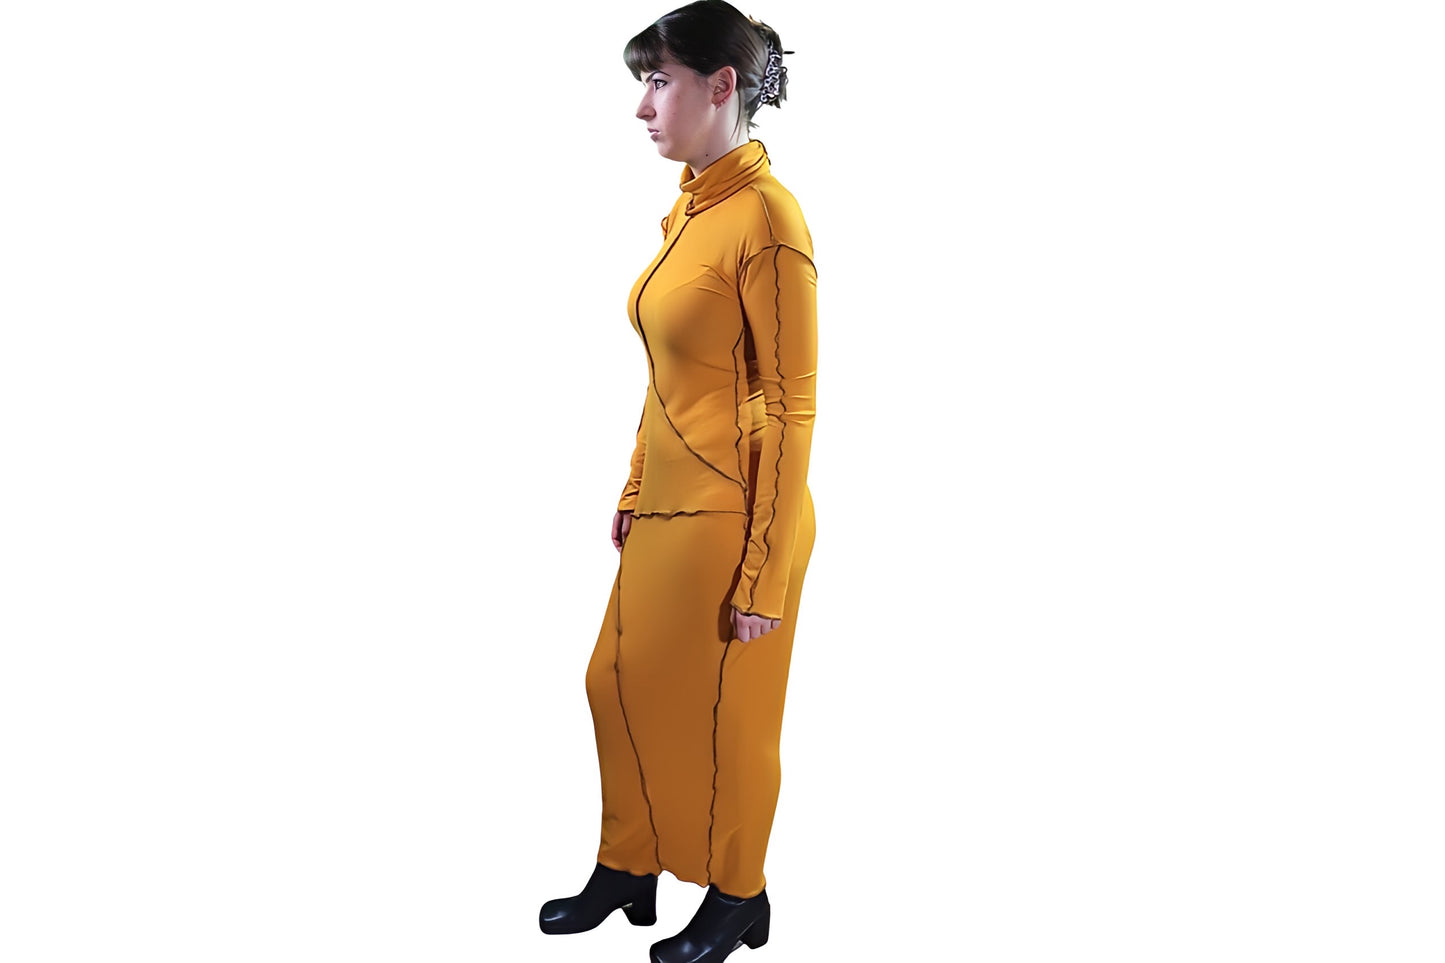 Mustard Ribbed Knit Bodycon Maxi Dress